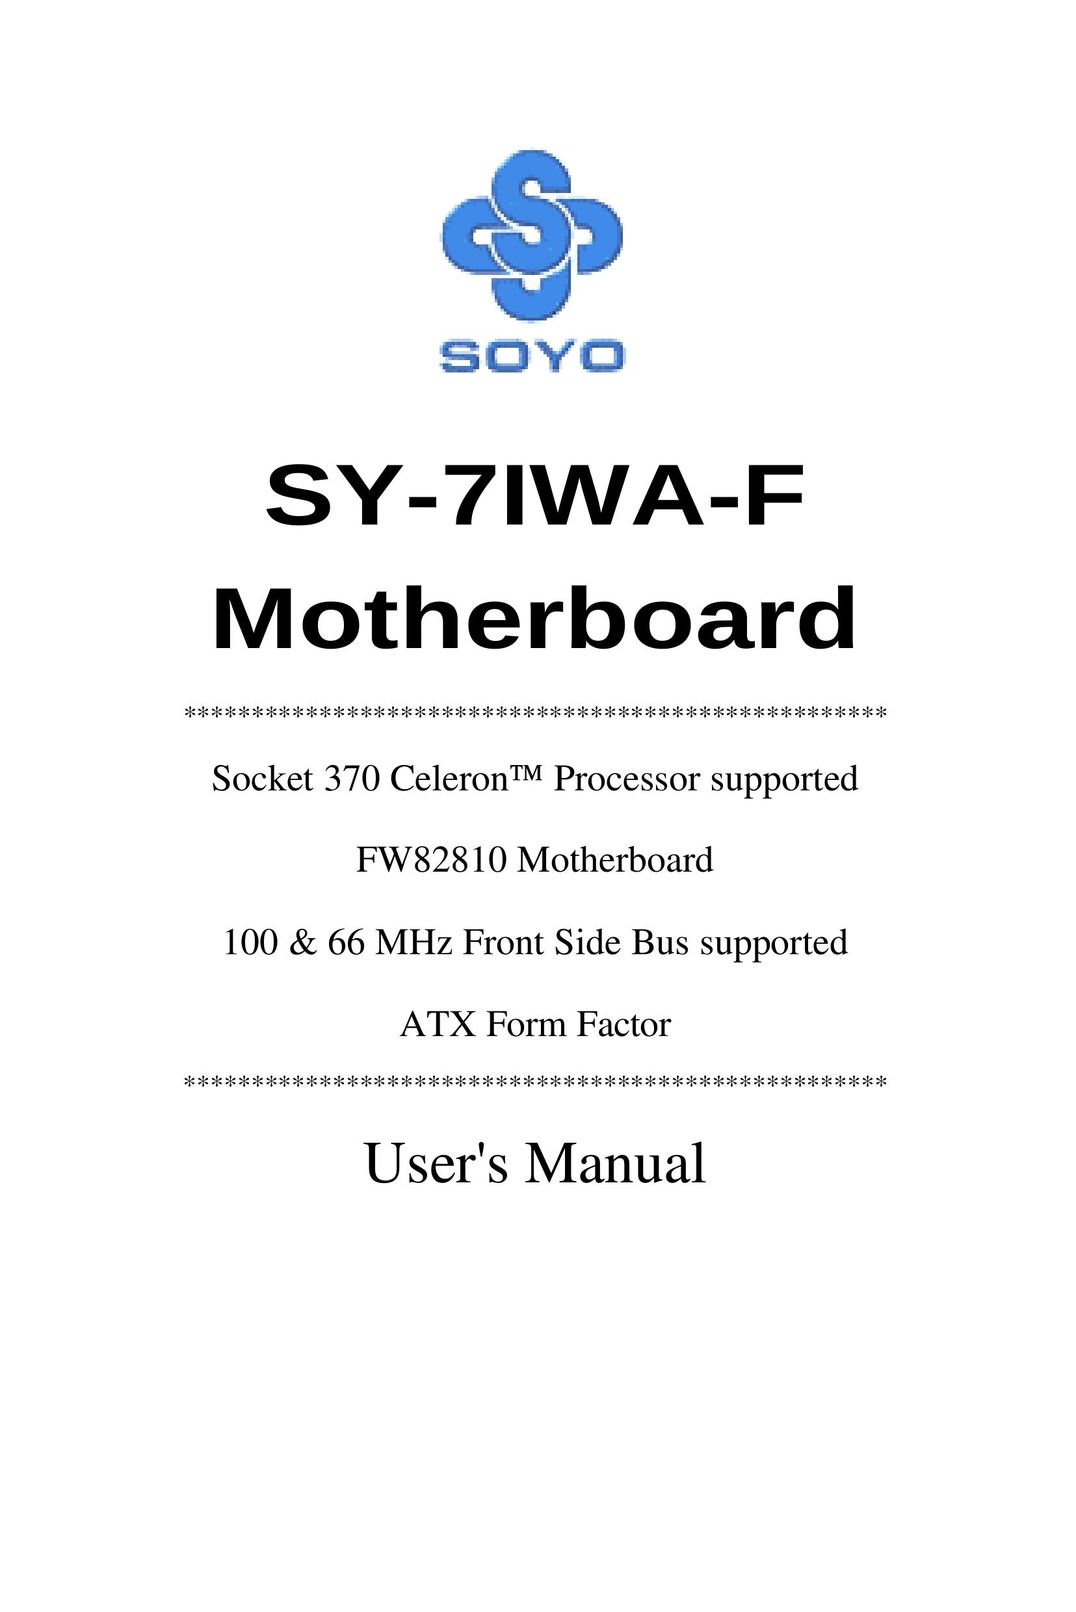 SOYO SY-7IWA-F Computer Hardware User Manual